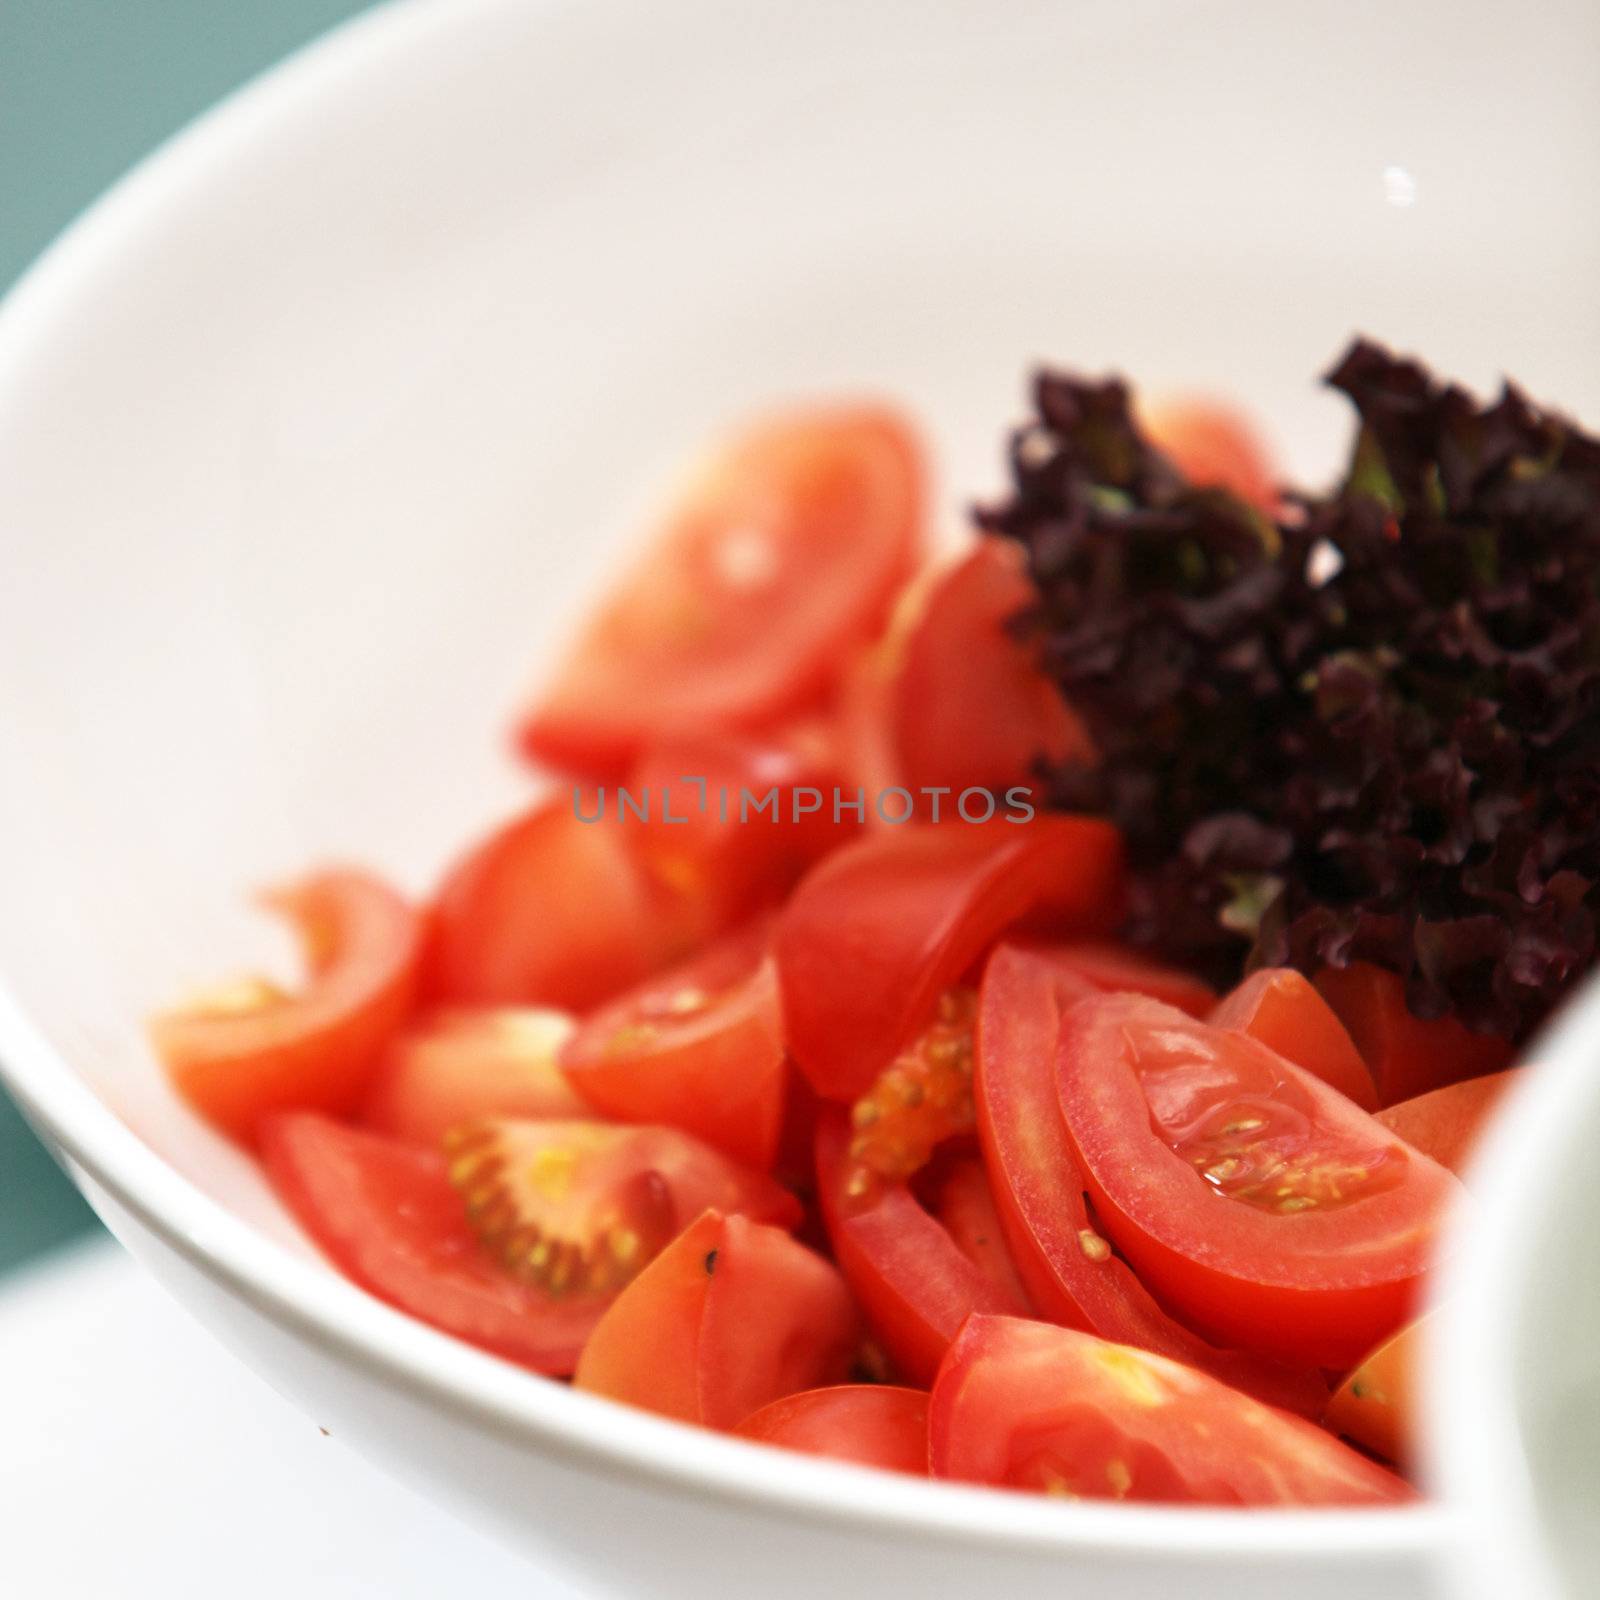 Fresh Tomato Salad  - Close-up